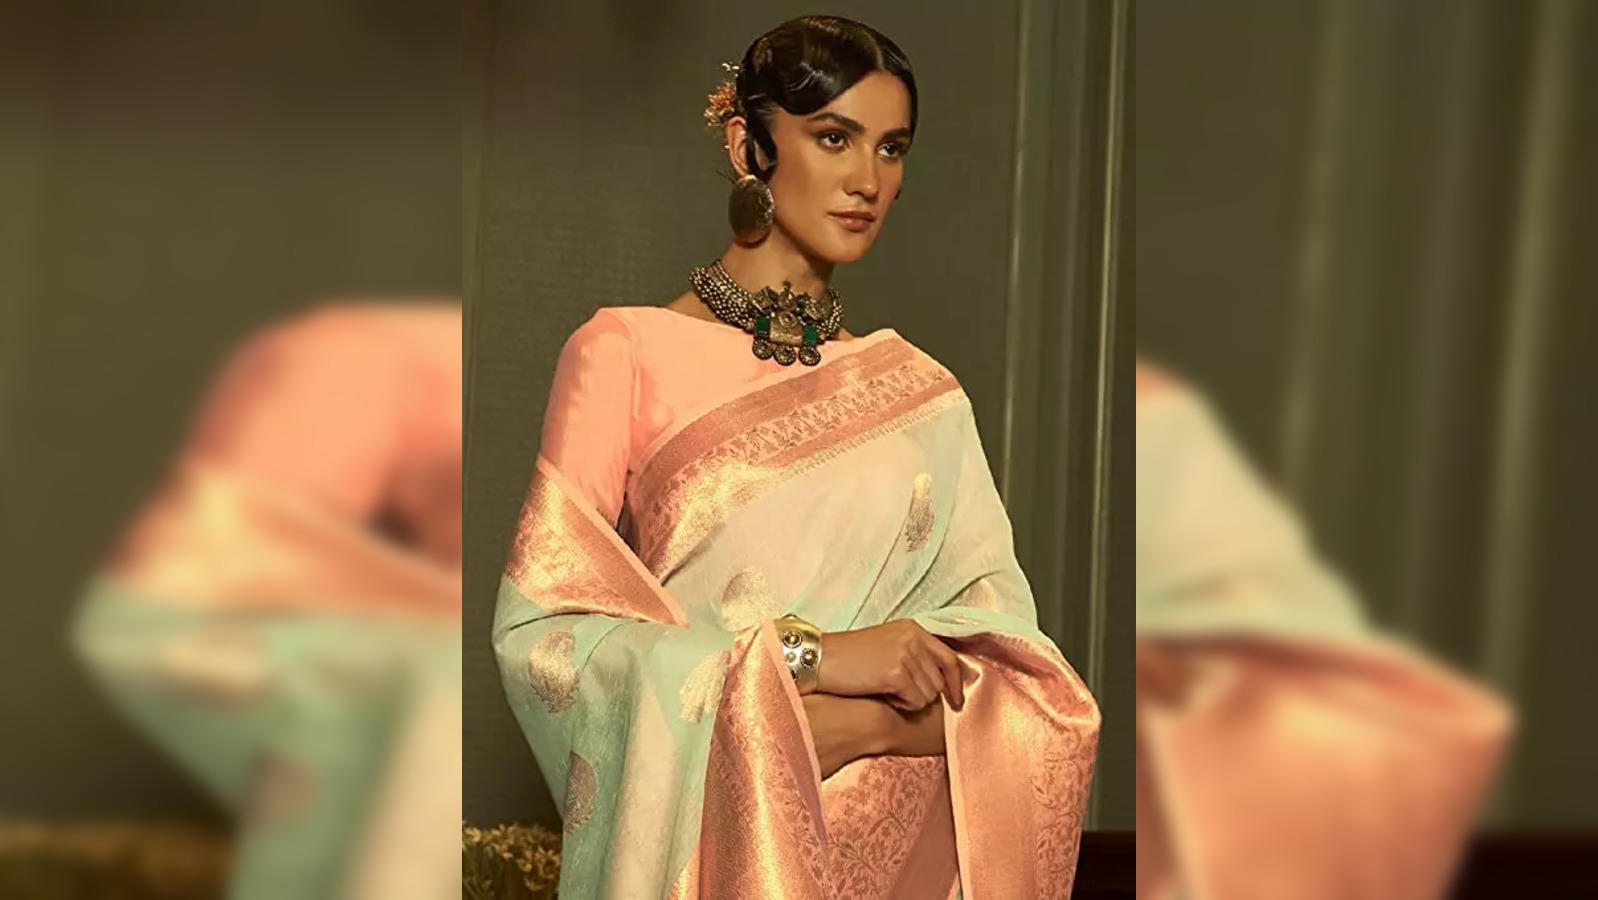 Buy CLOTH BOOST Beautiful Linen Saree Digital print (Pinkgrey) at Amazon.in